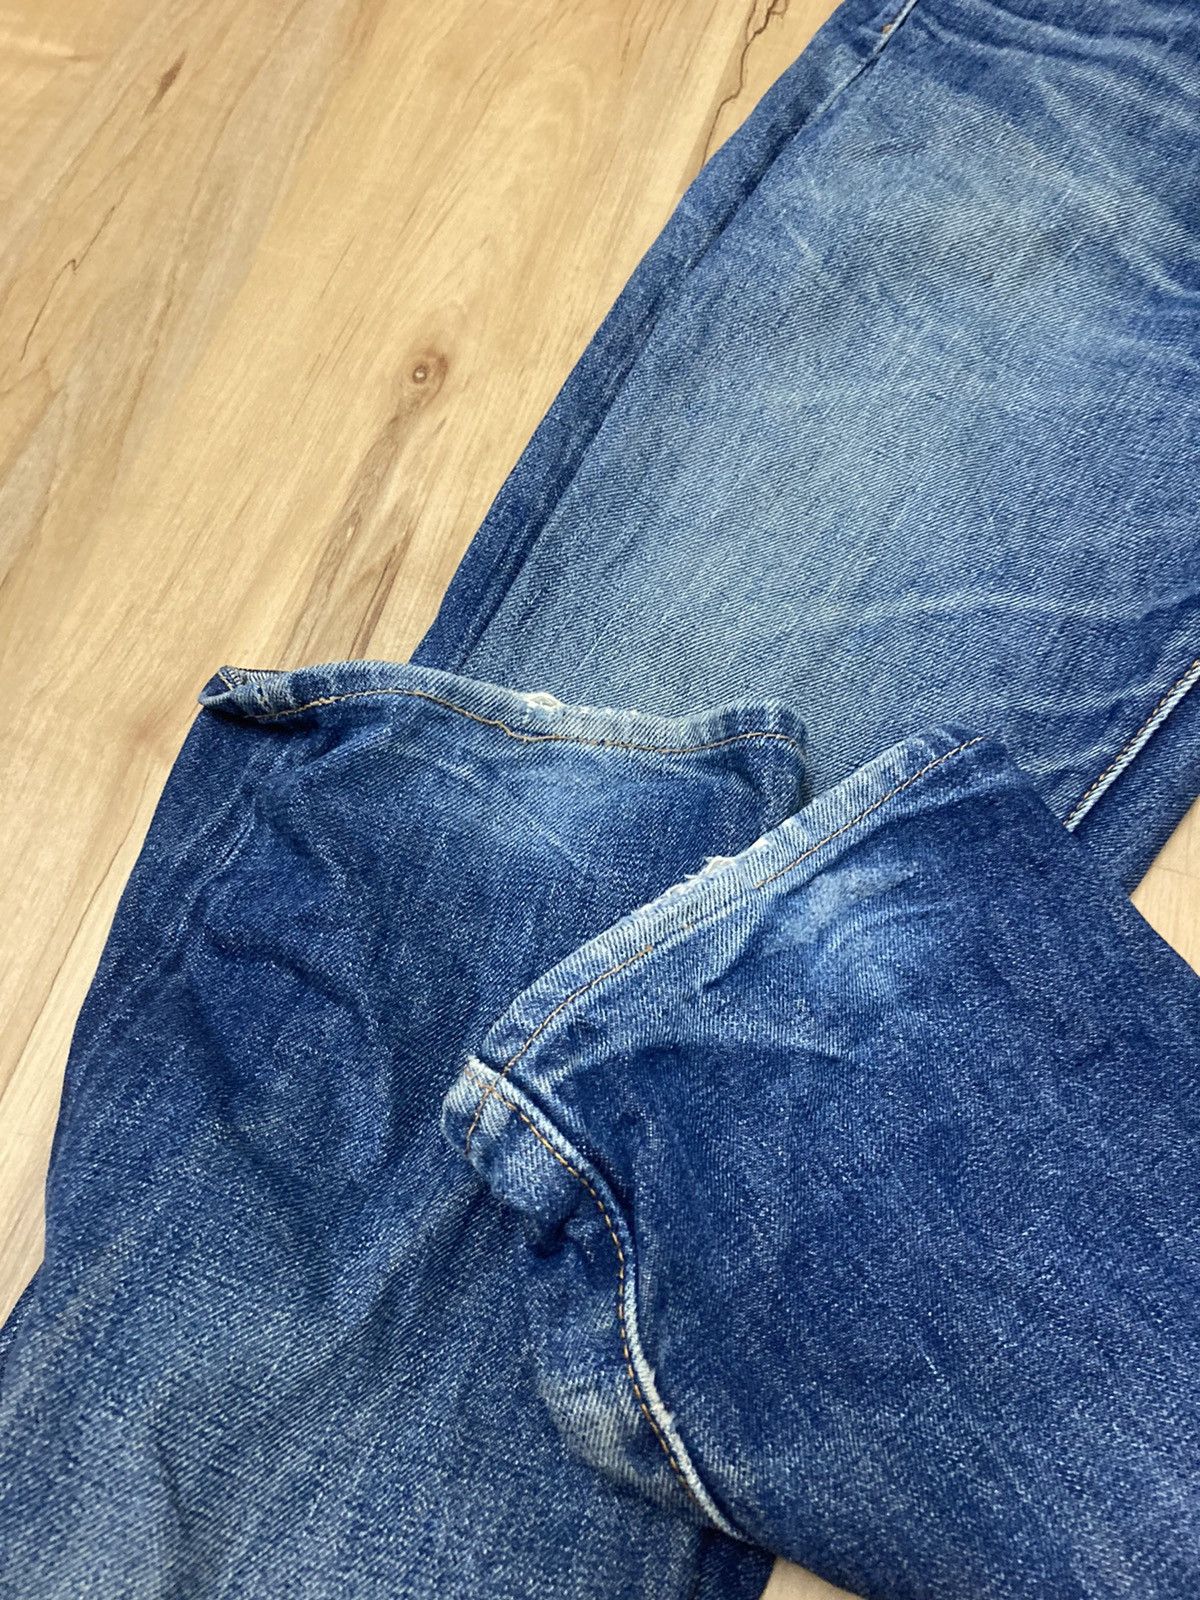 Denime Vintage denime jeans Size US 30 / EU 46 - 7 Thumbnail